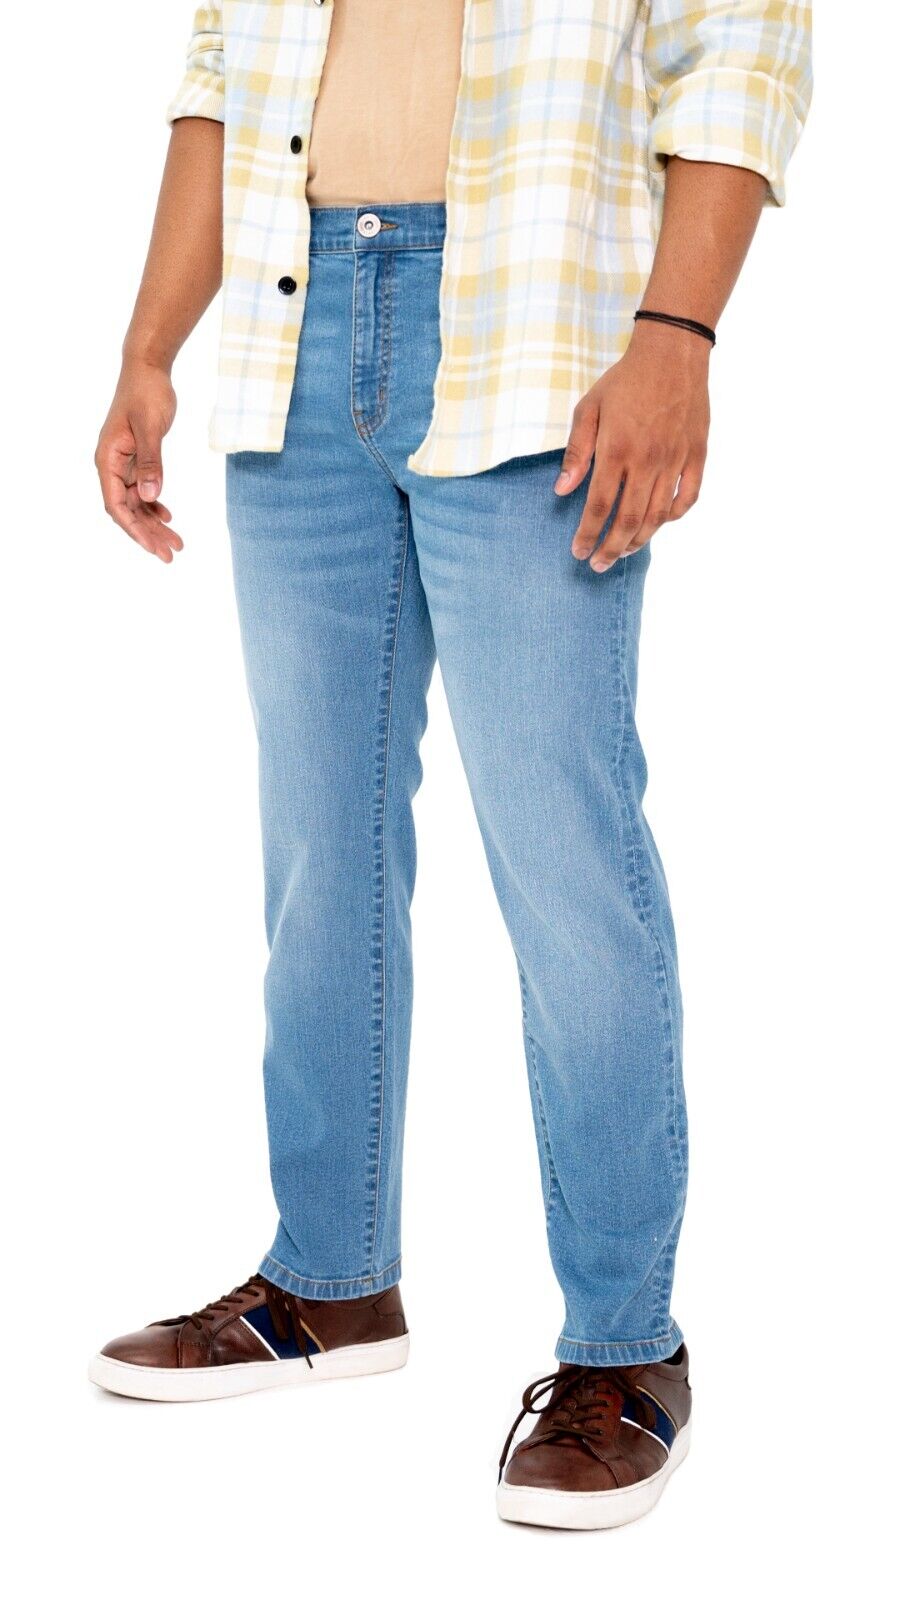 Alamo Stretch Slim Fit Jeans for Men - Classic Denim Men's Jeans with 5 Pockets